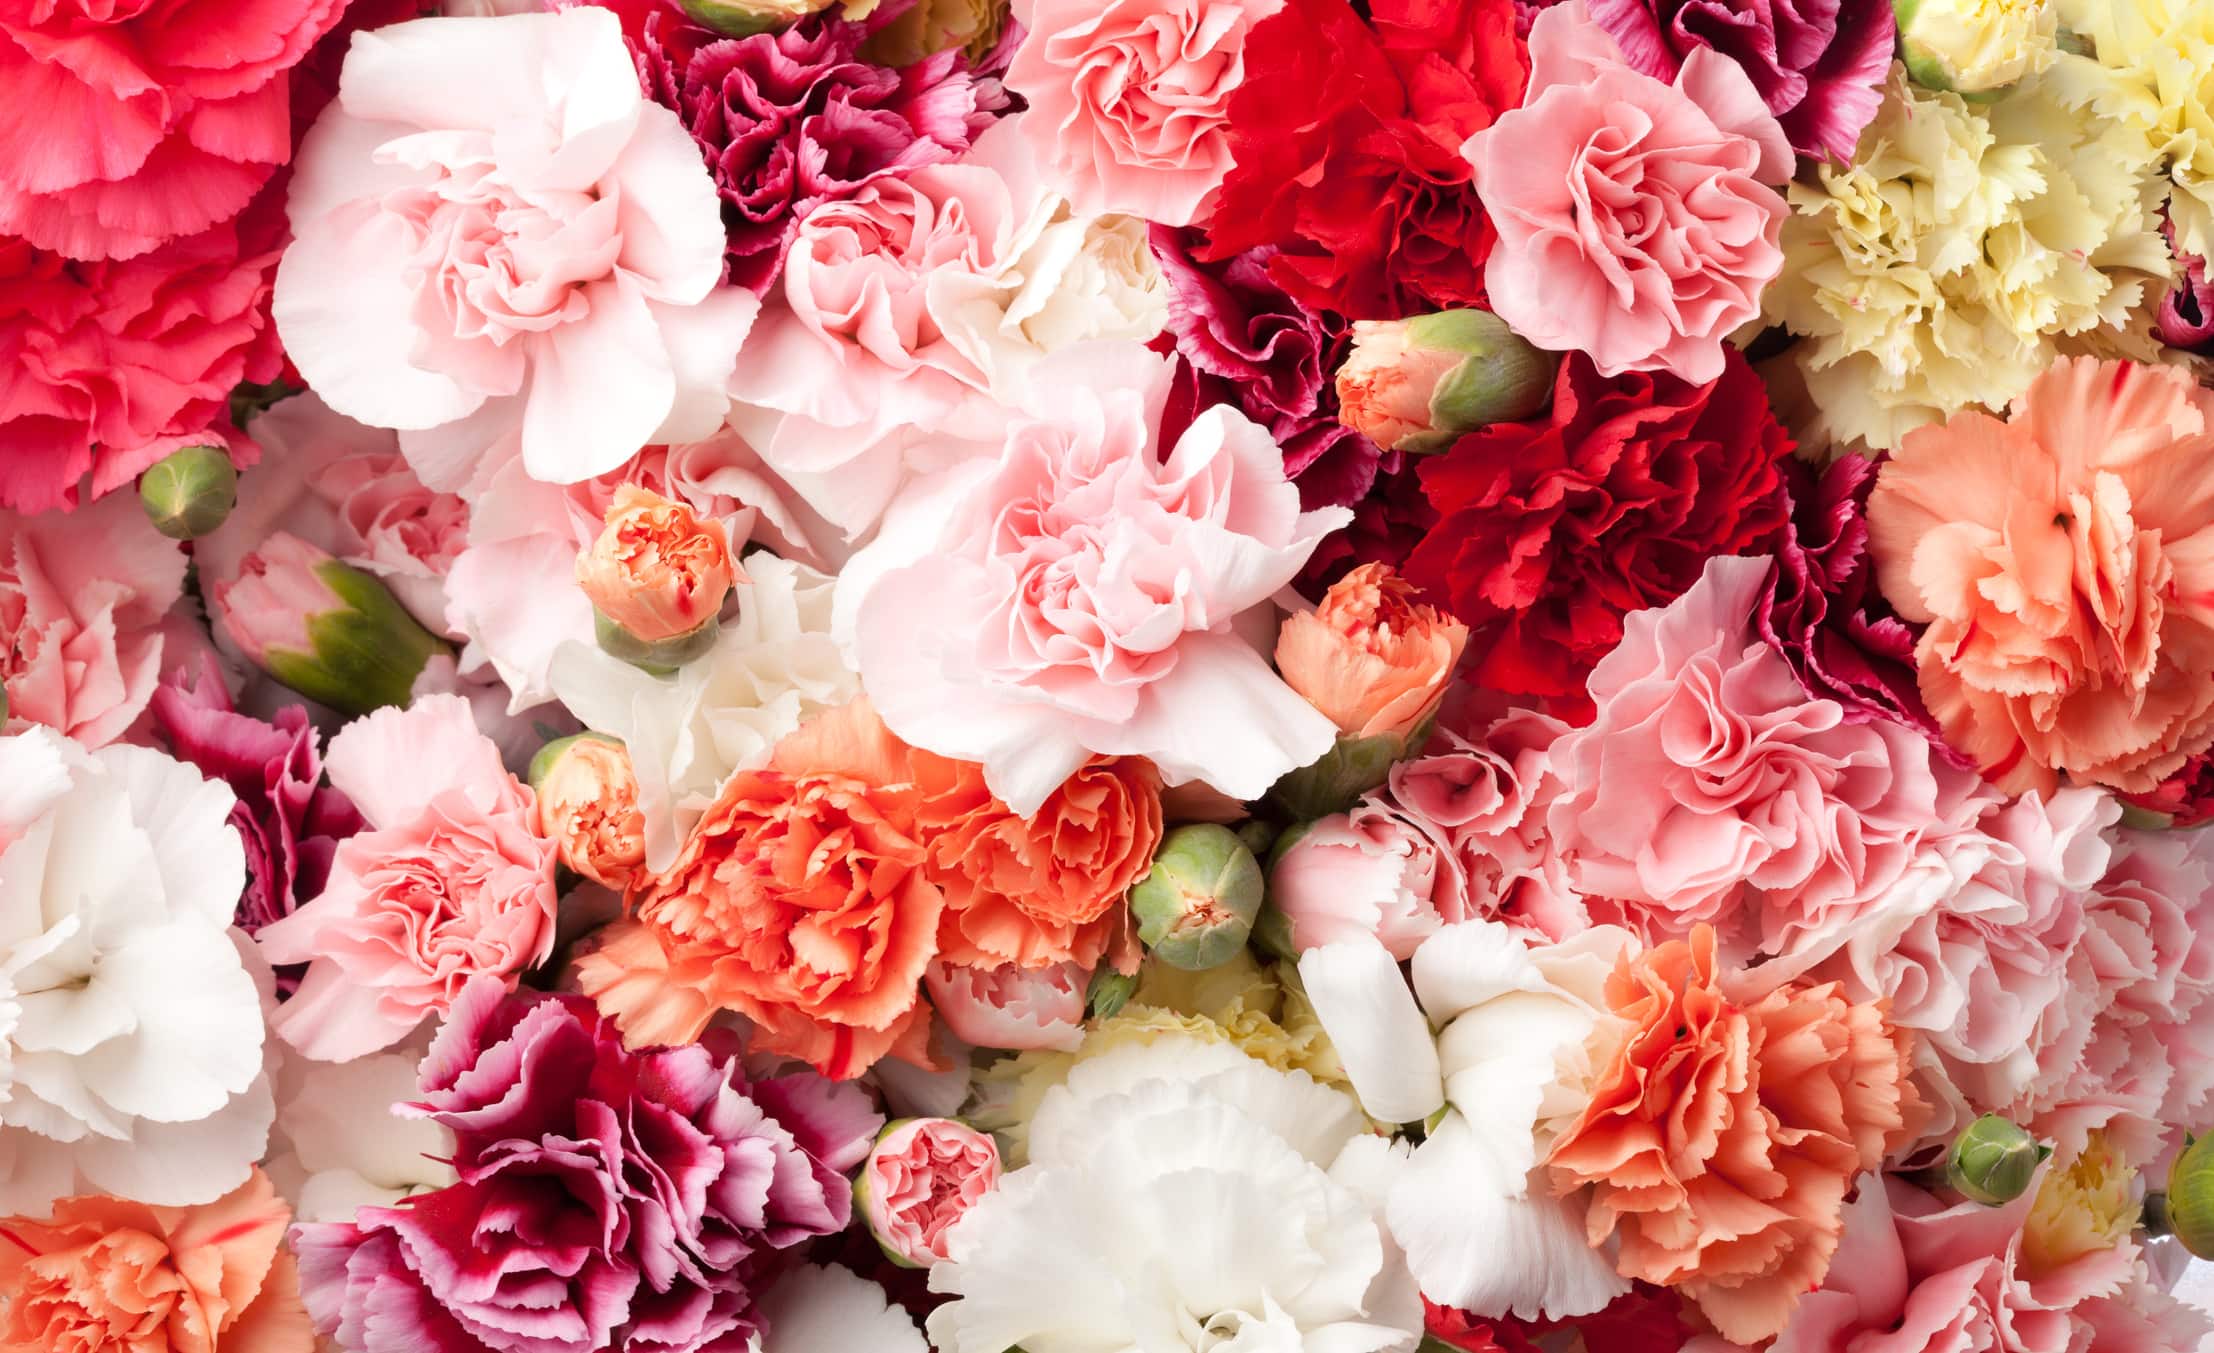 Arrangement of carnations in multicolors